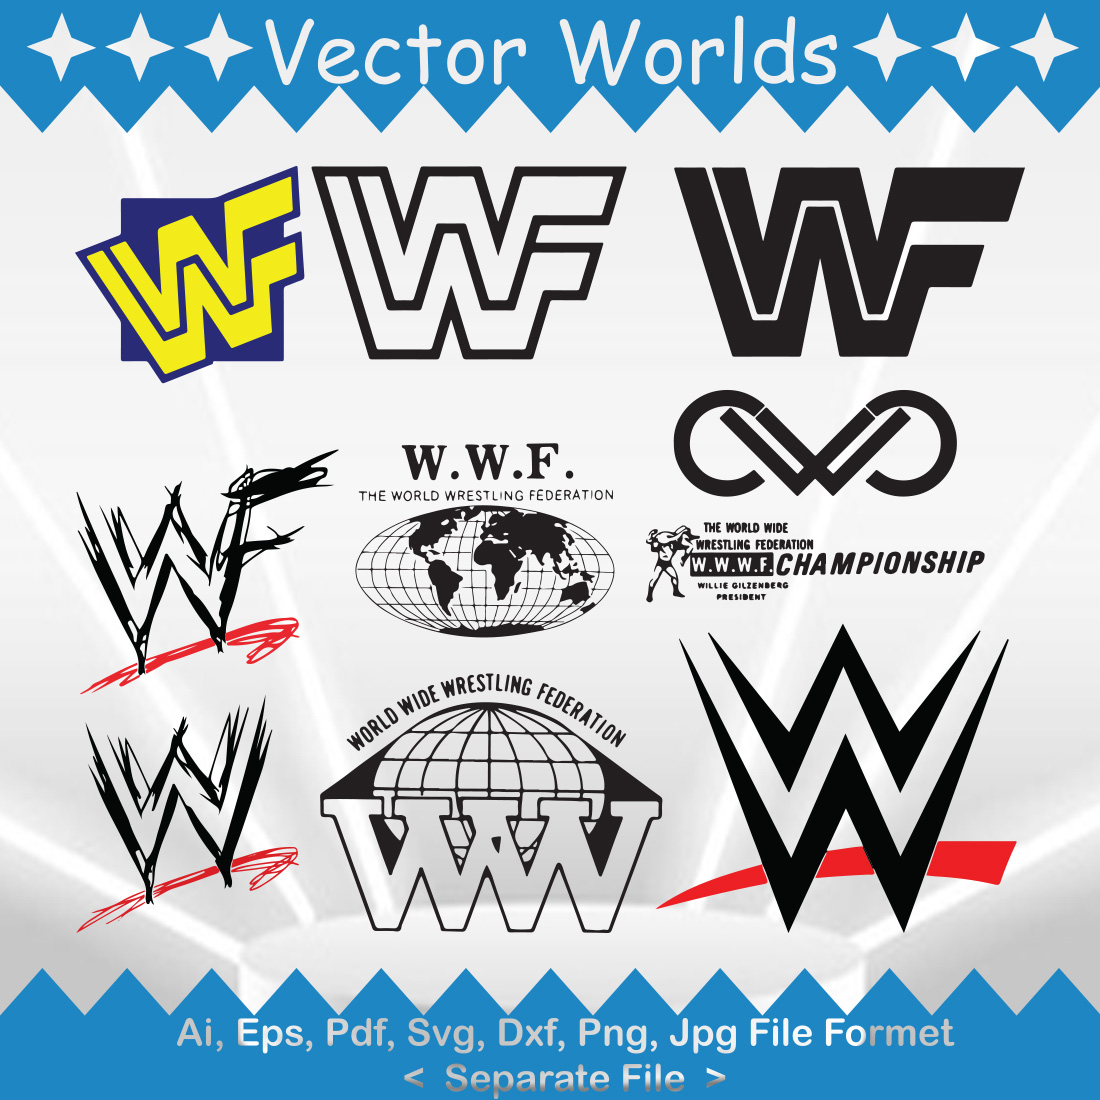 WWE Logo SVG Vector Design cover image.